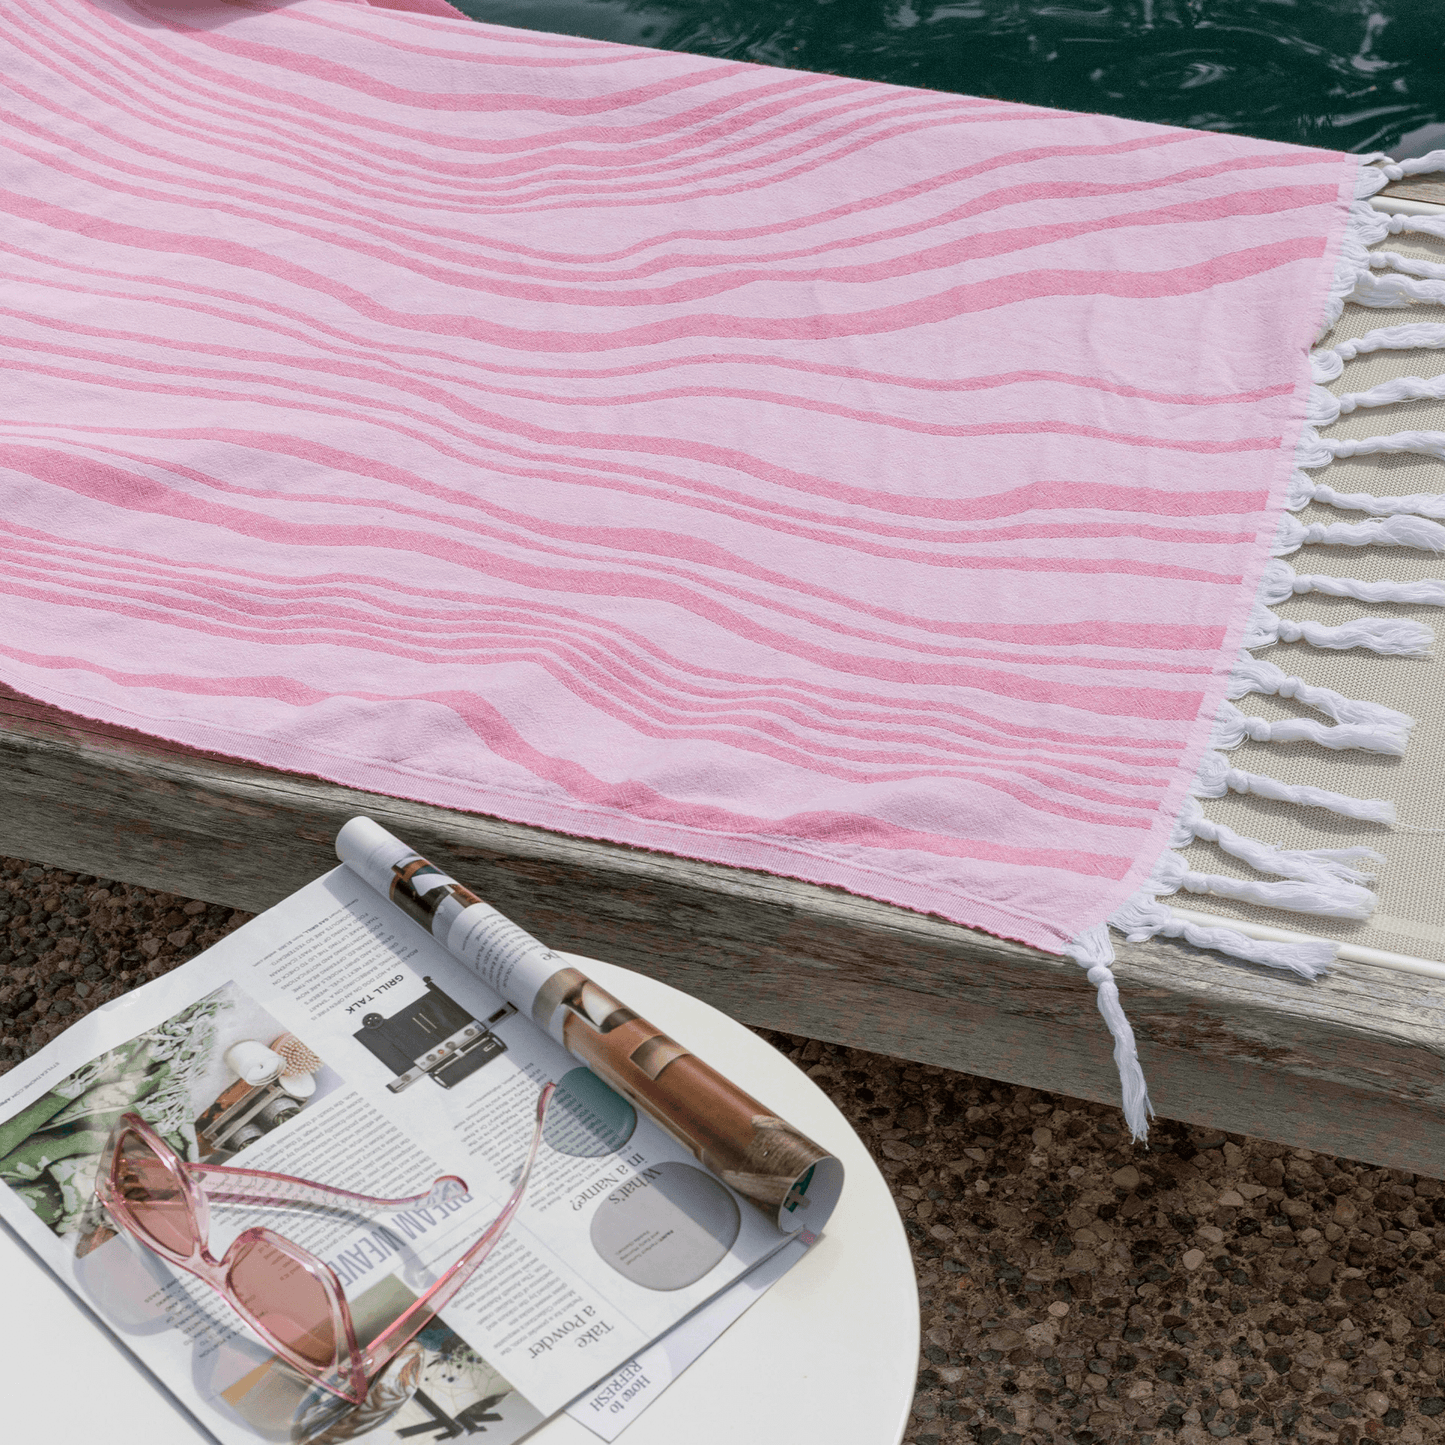 Pink Turkish towel poolside